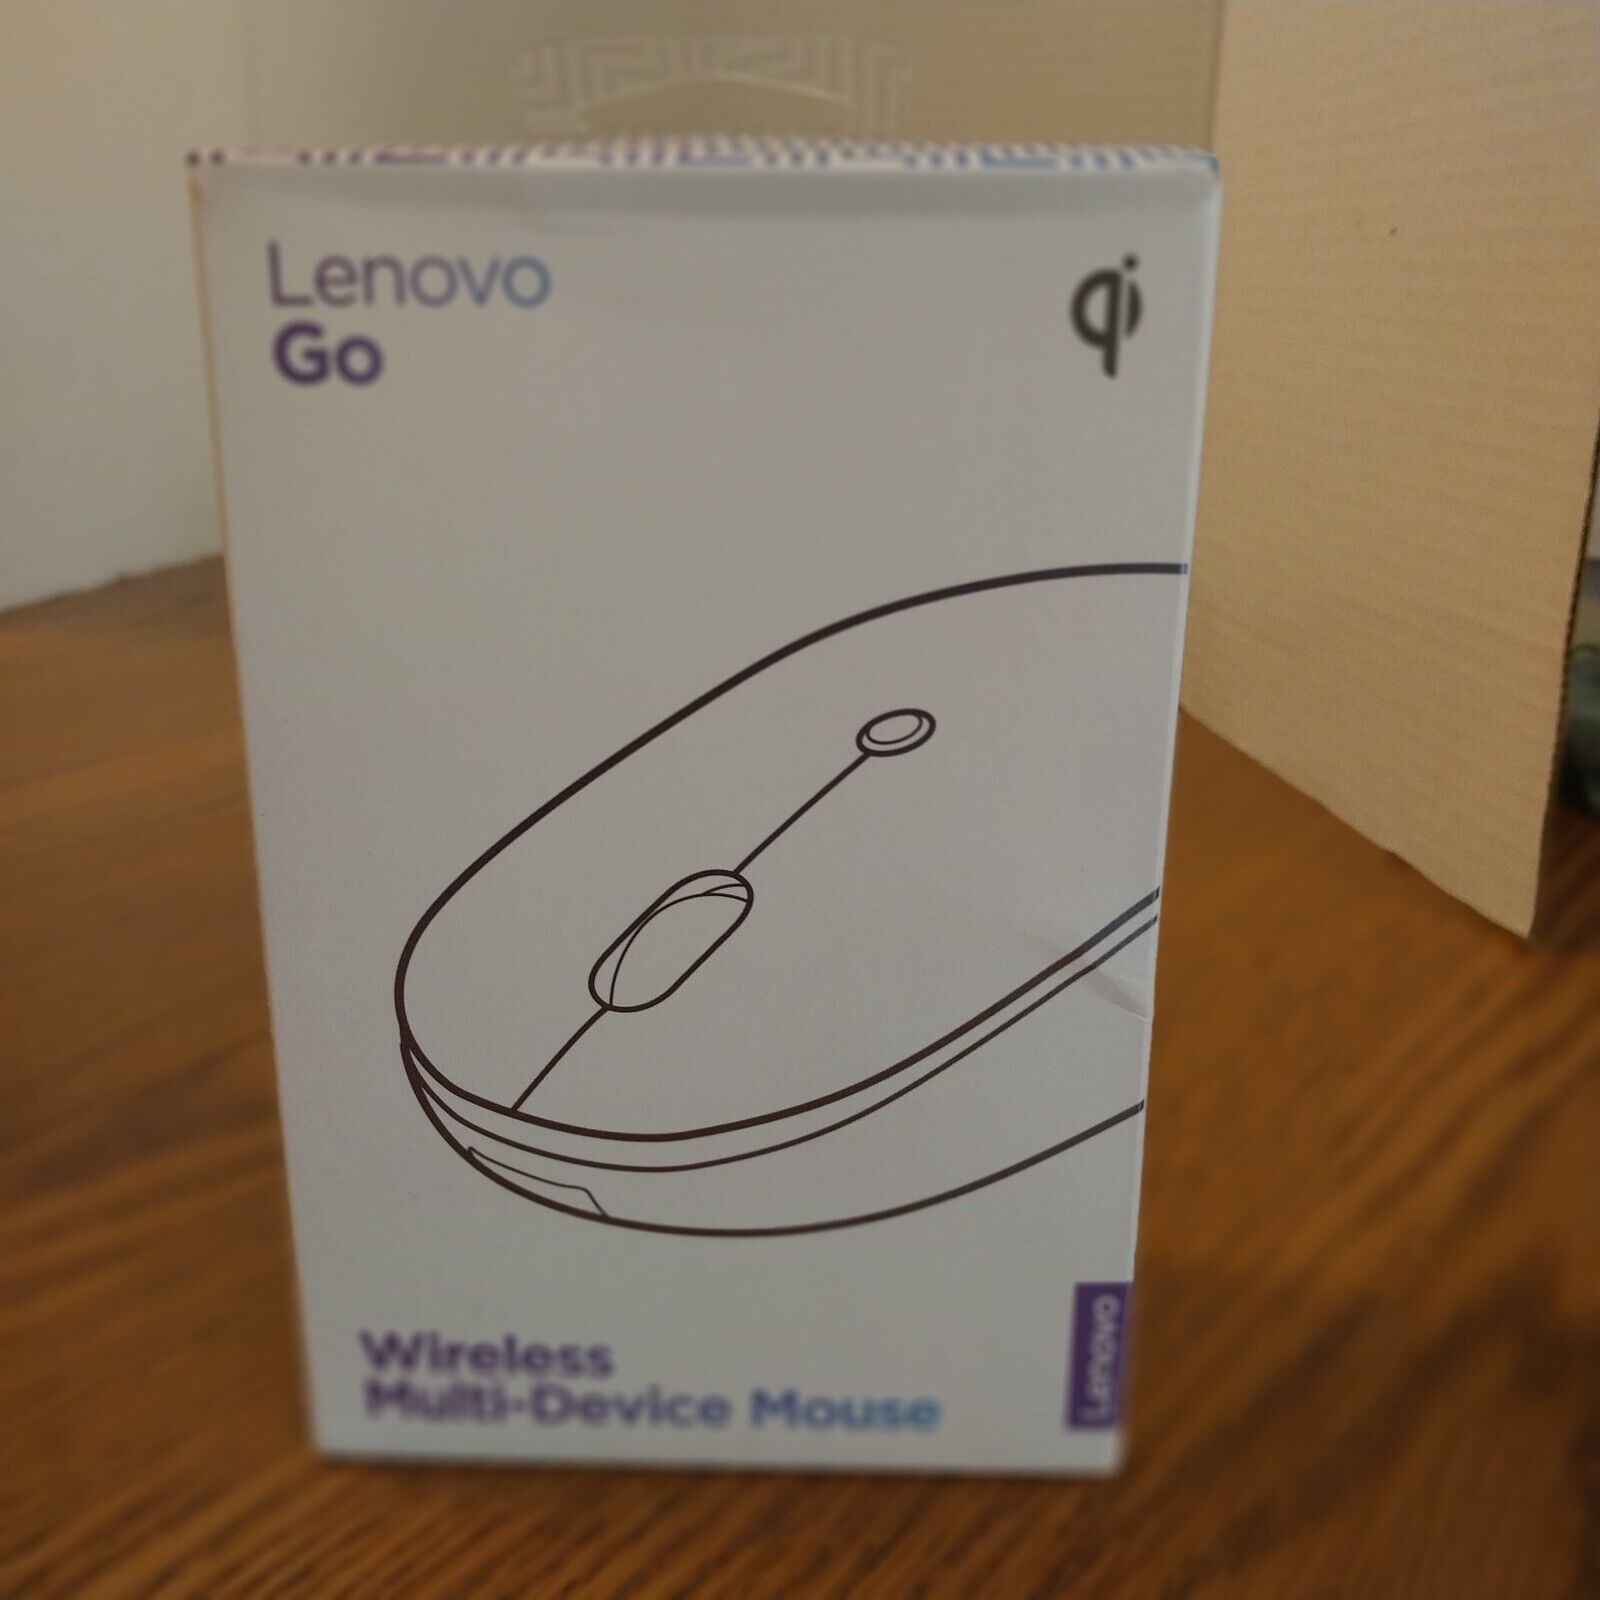 Lenovo Go Wireless Multi-Device Mouse (Thunder Black) New Sealed in Original Box